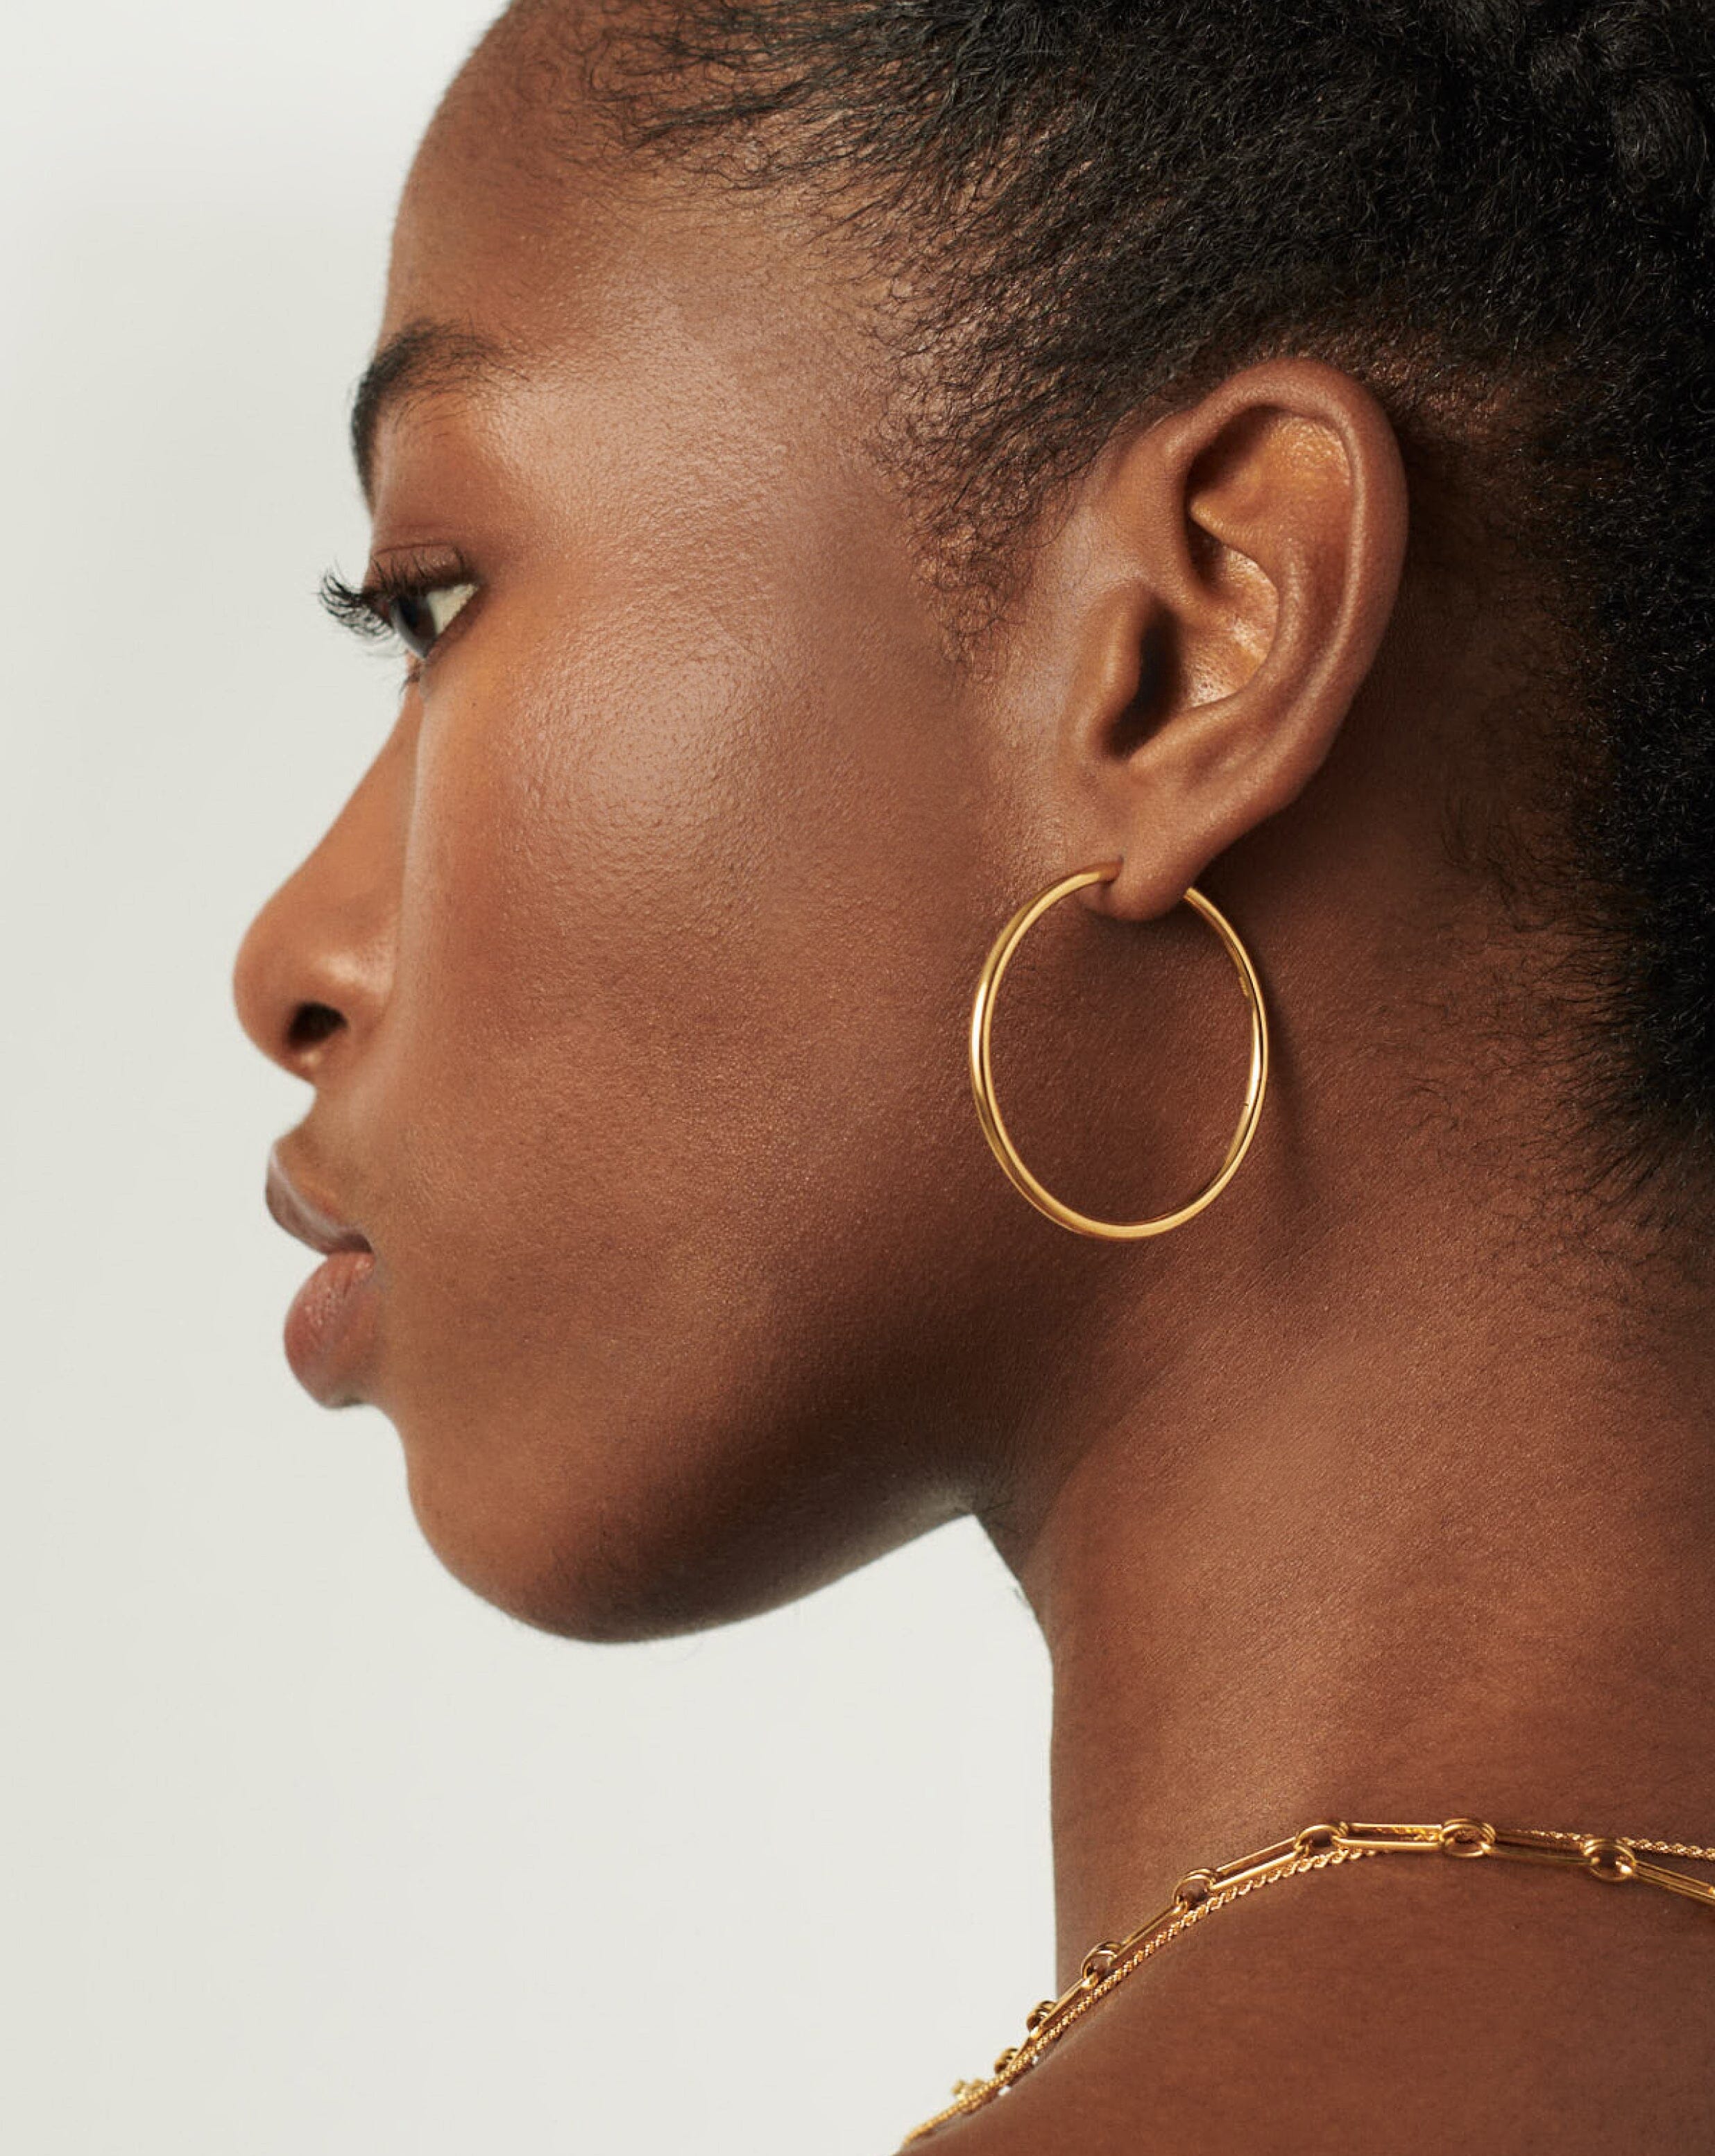 Are hoop earrings trashy or classy? - Quora